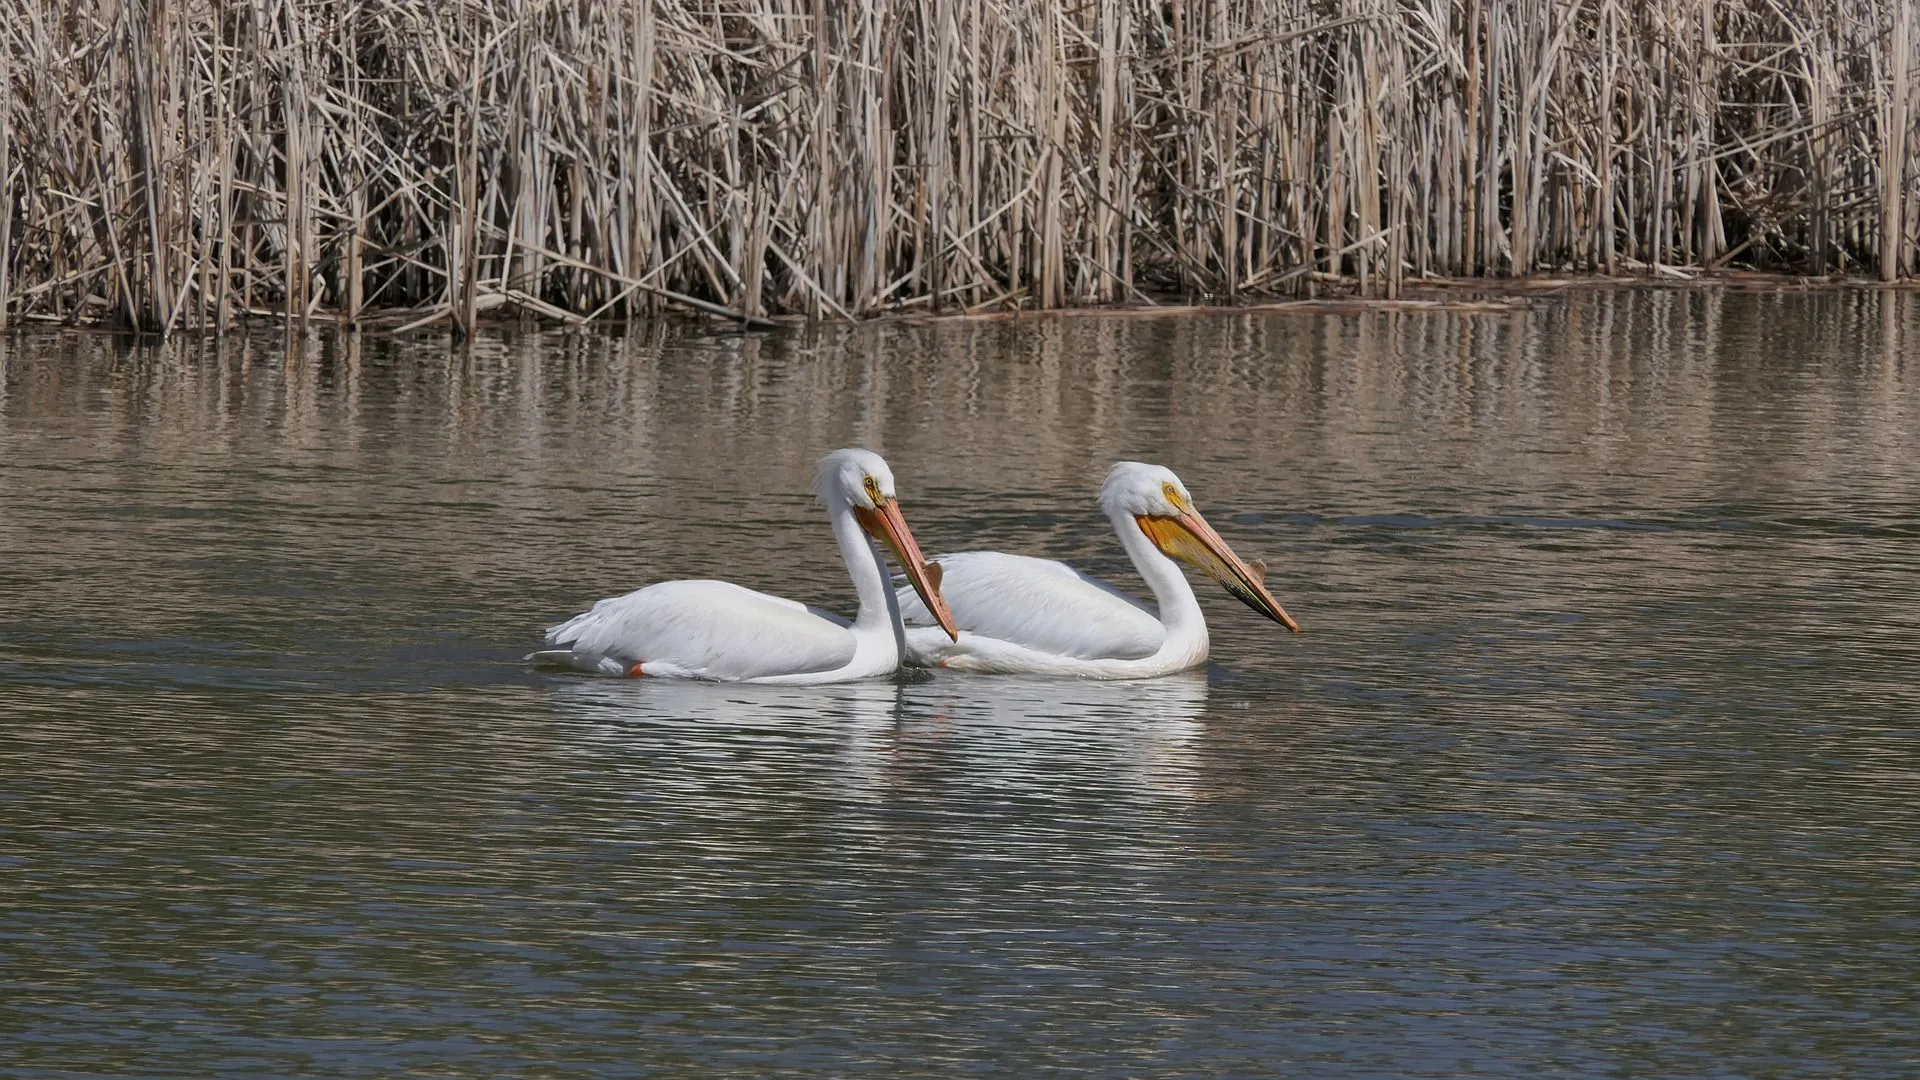 Pelicans are often found swimming in Lake Winnipeg.